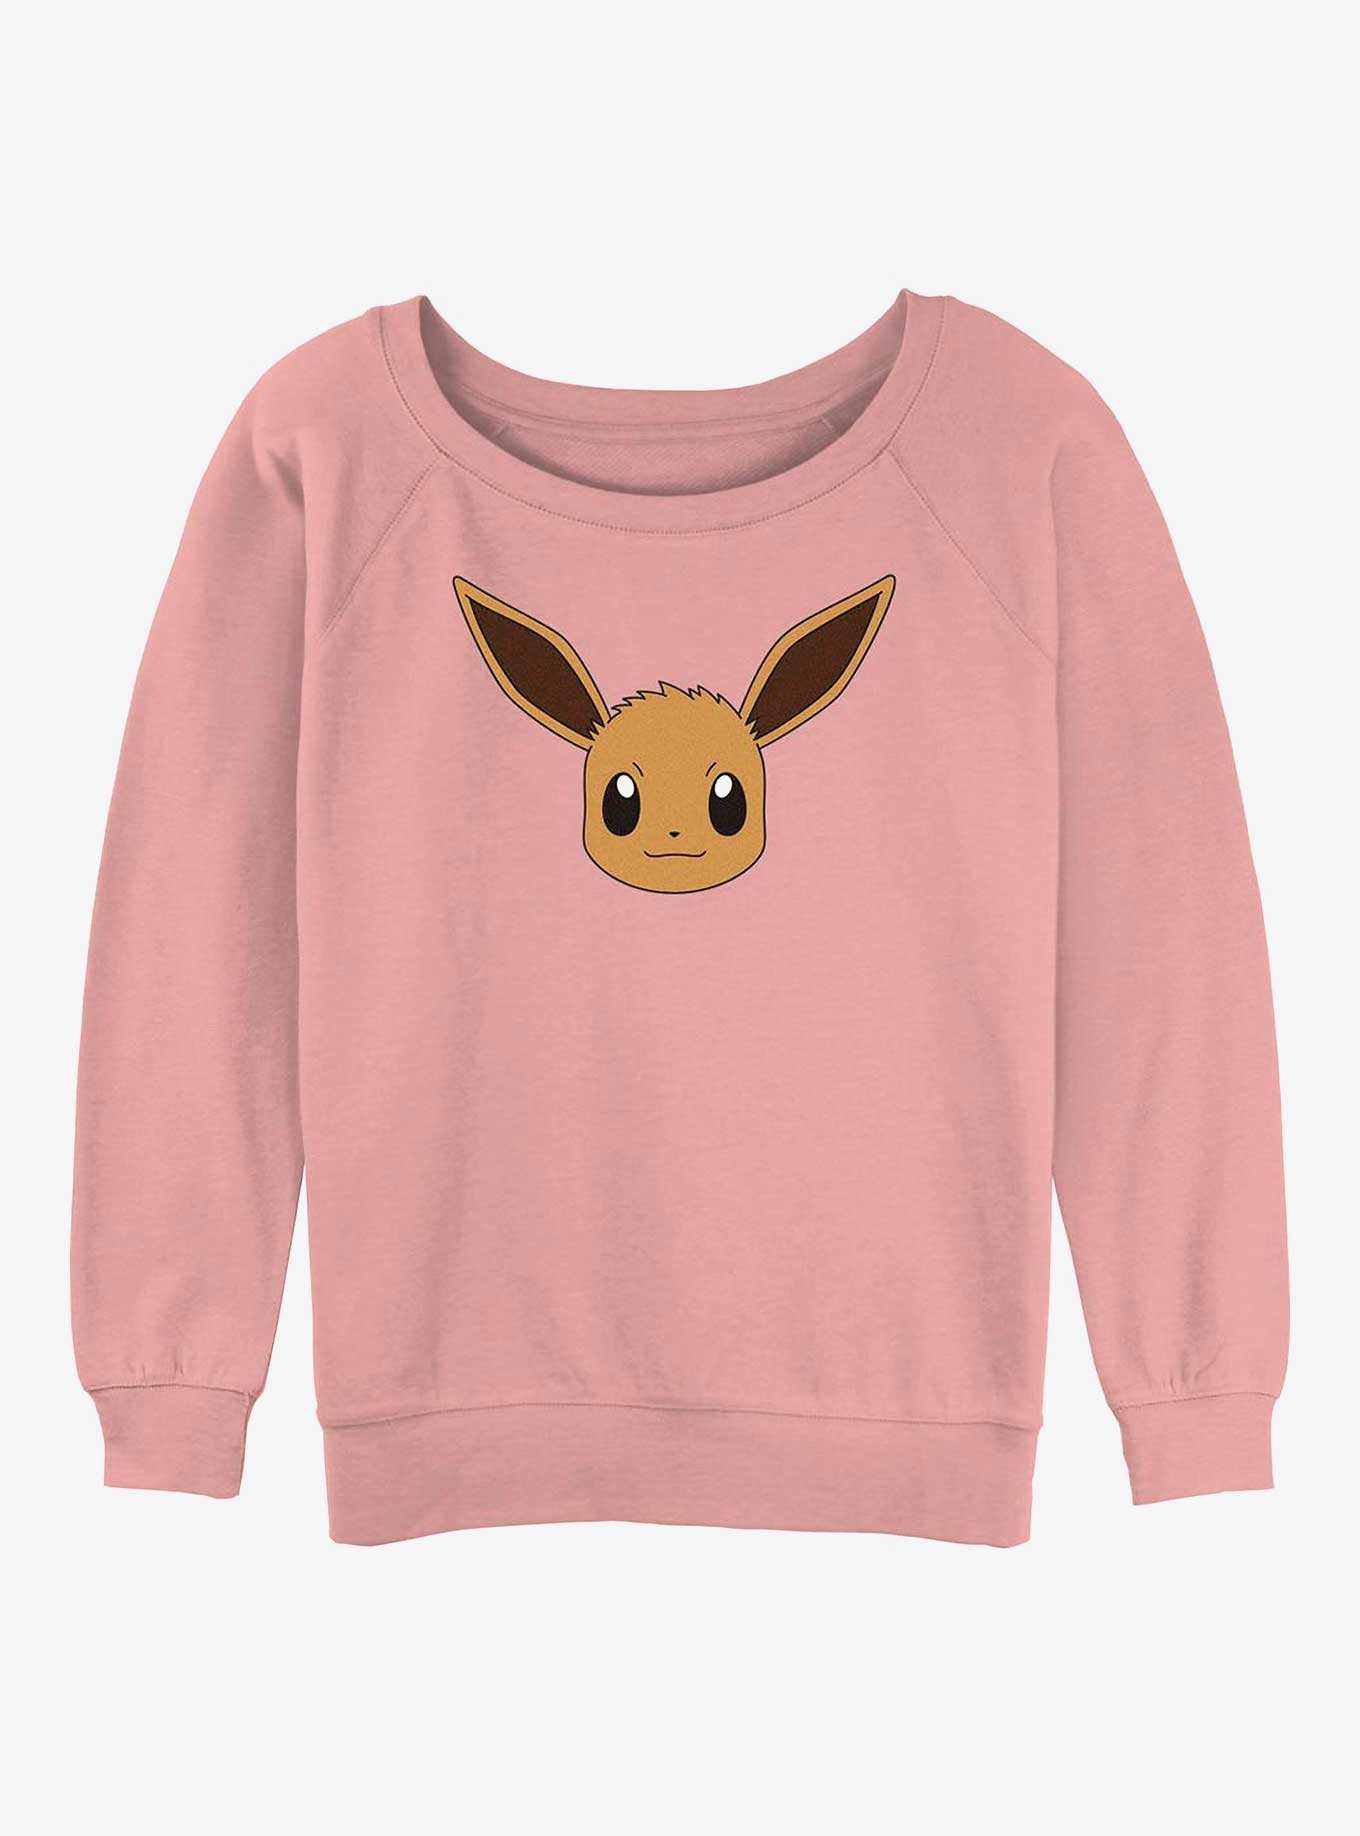 Pokemon Eevee Face Girls Slouchy Sweatshirt, , hi-res